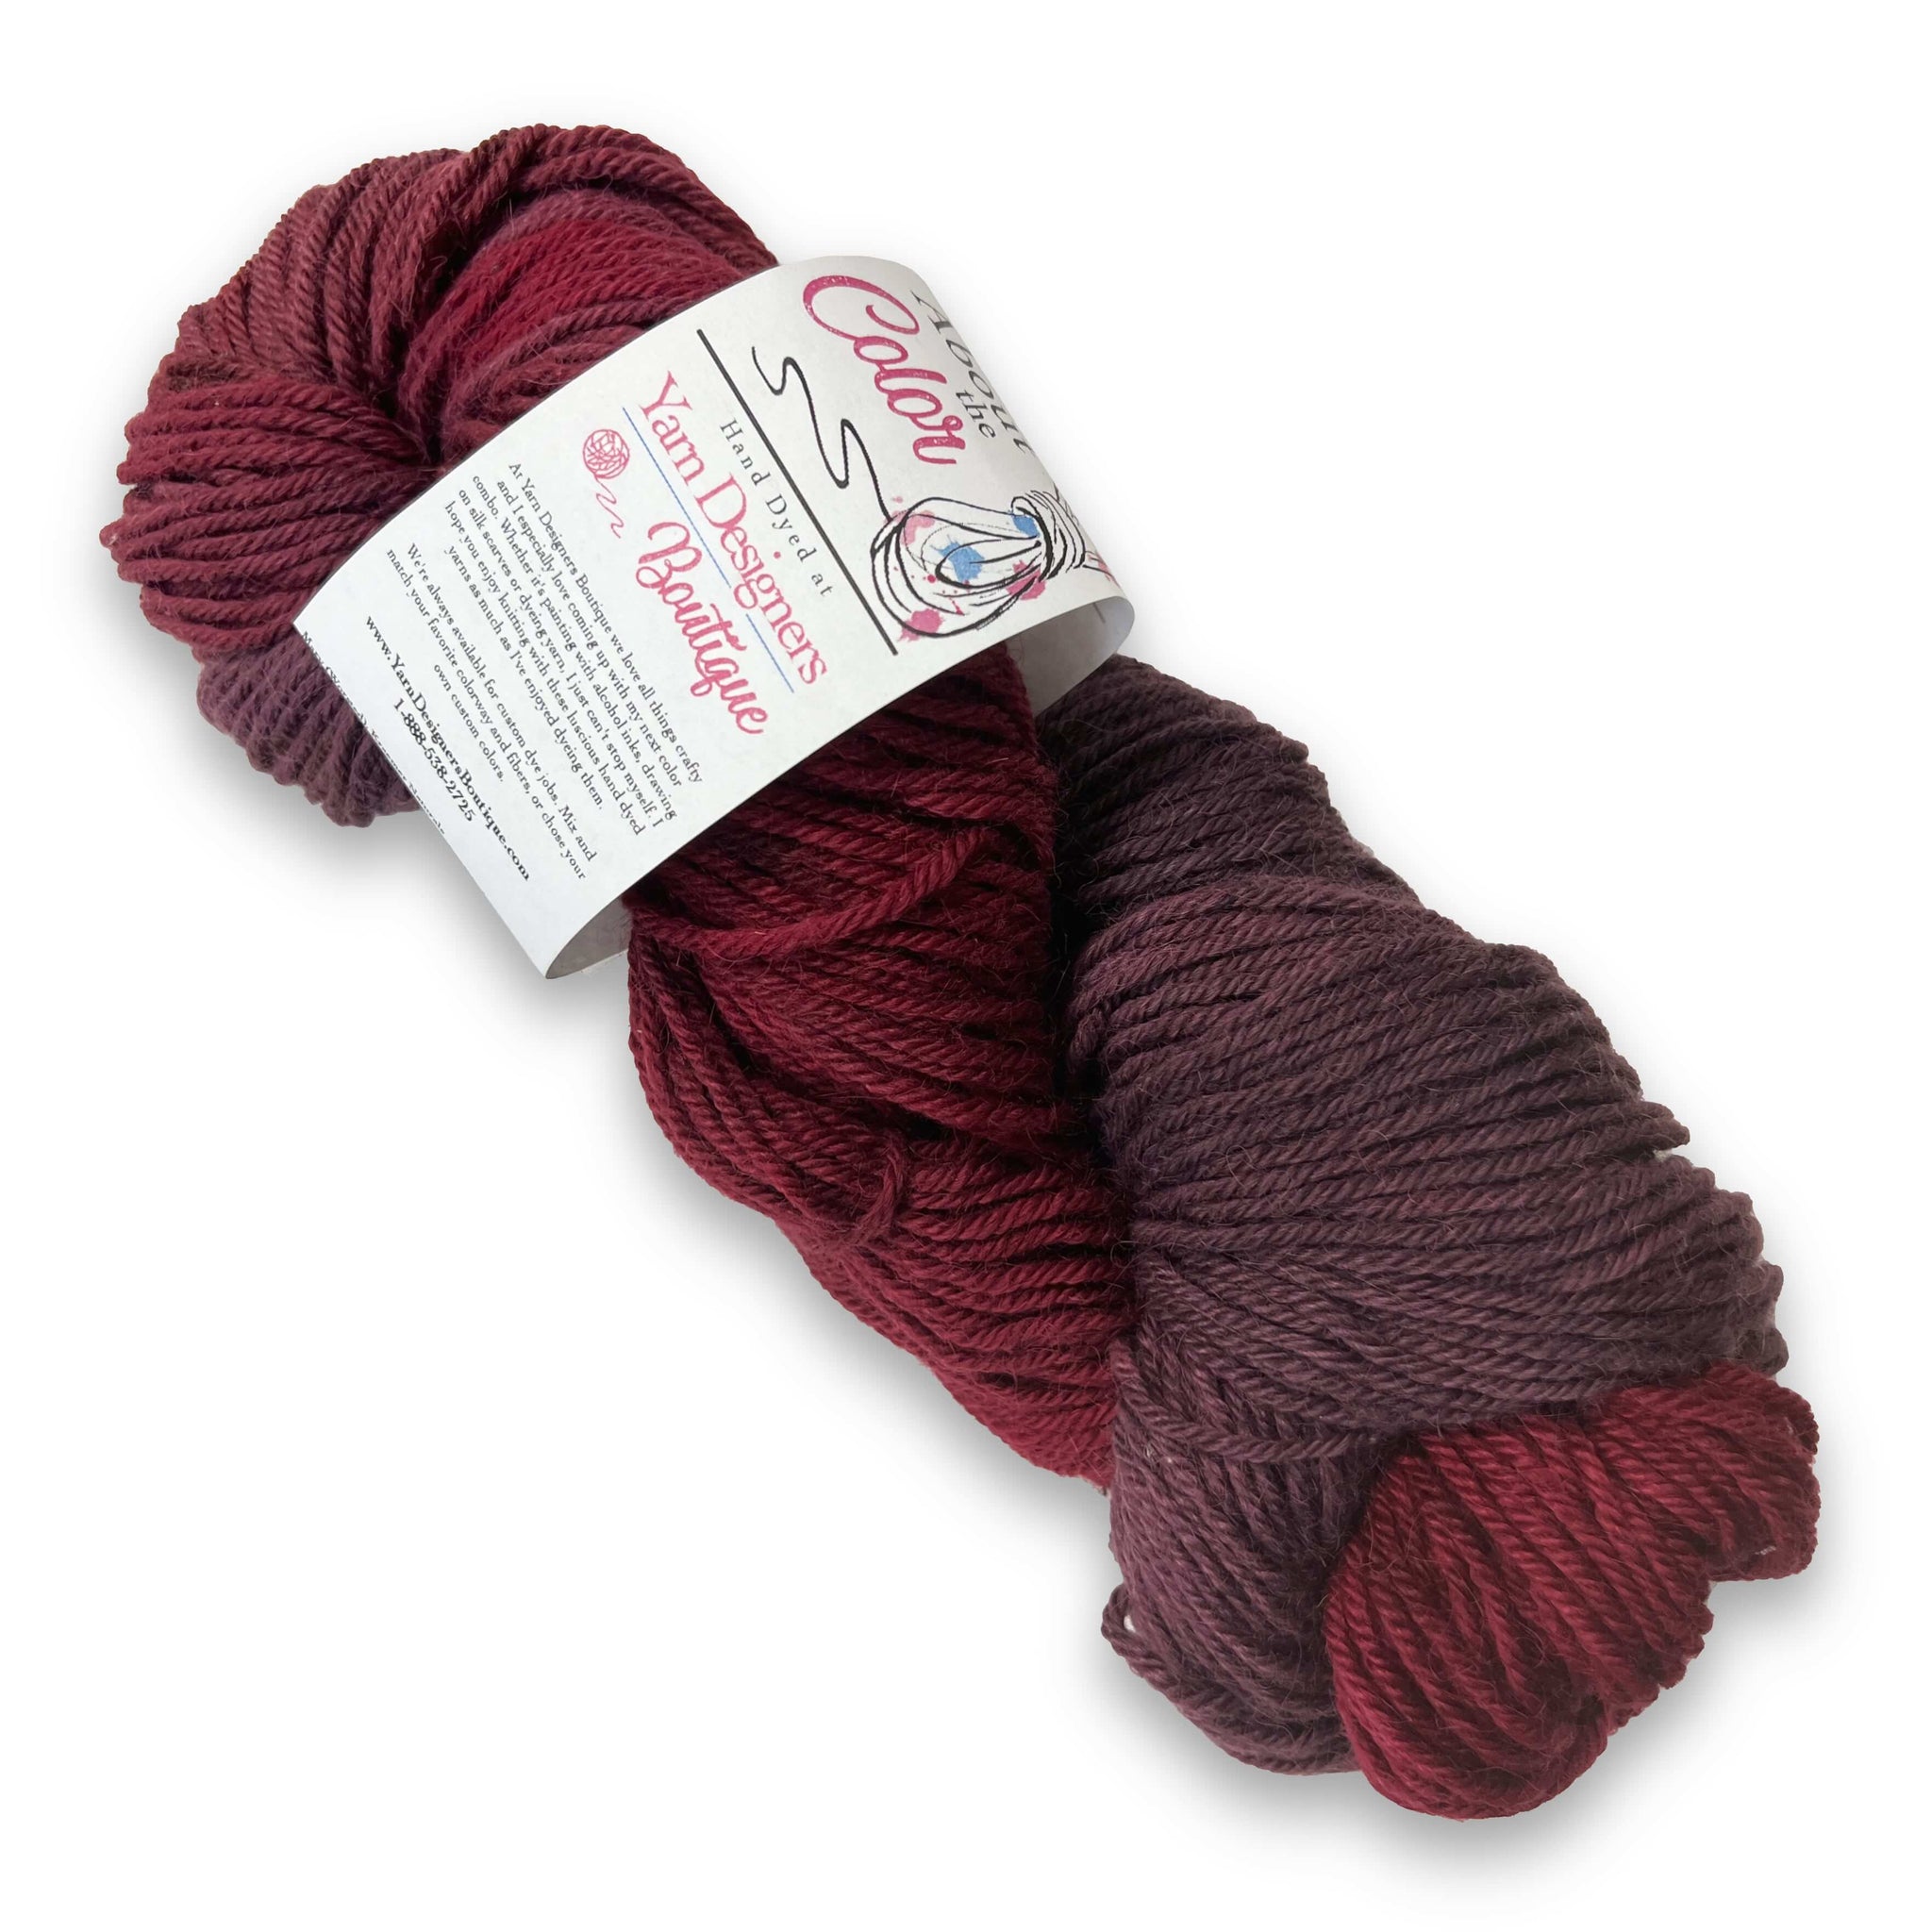 Alpaca Yarn Gift Set, Pink Purple Hand-Dyed Suri Alpaca Yarn Set